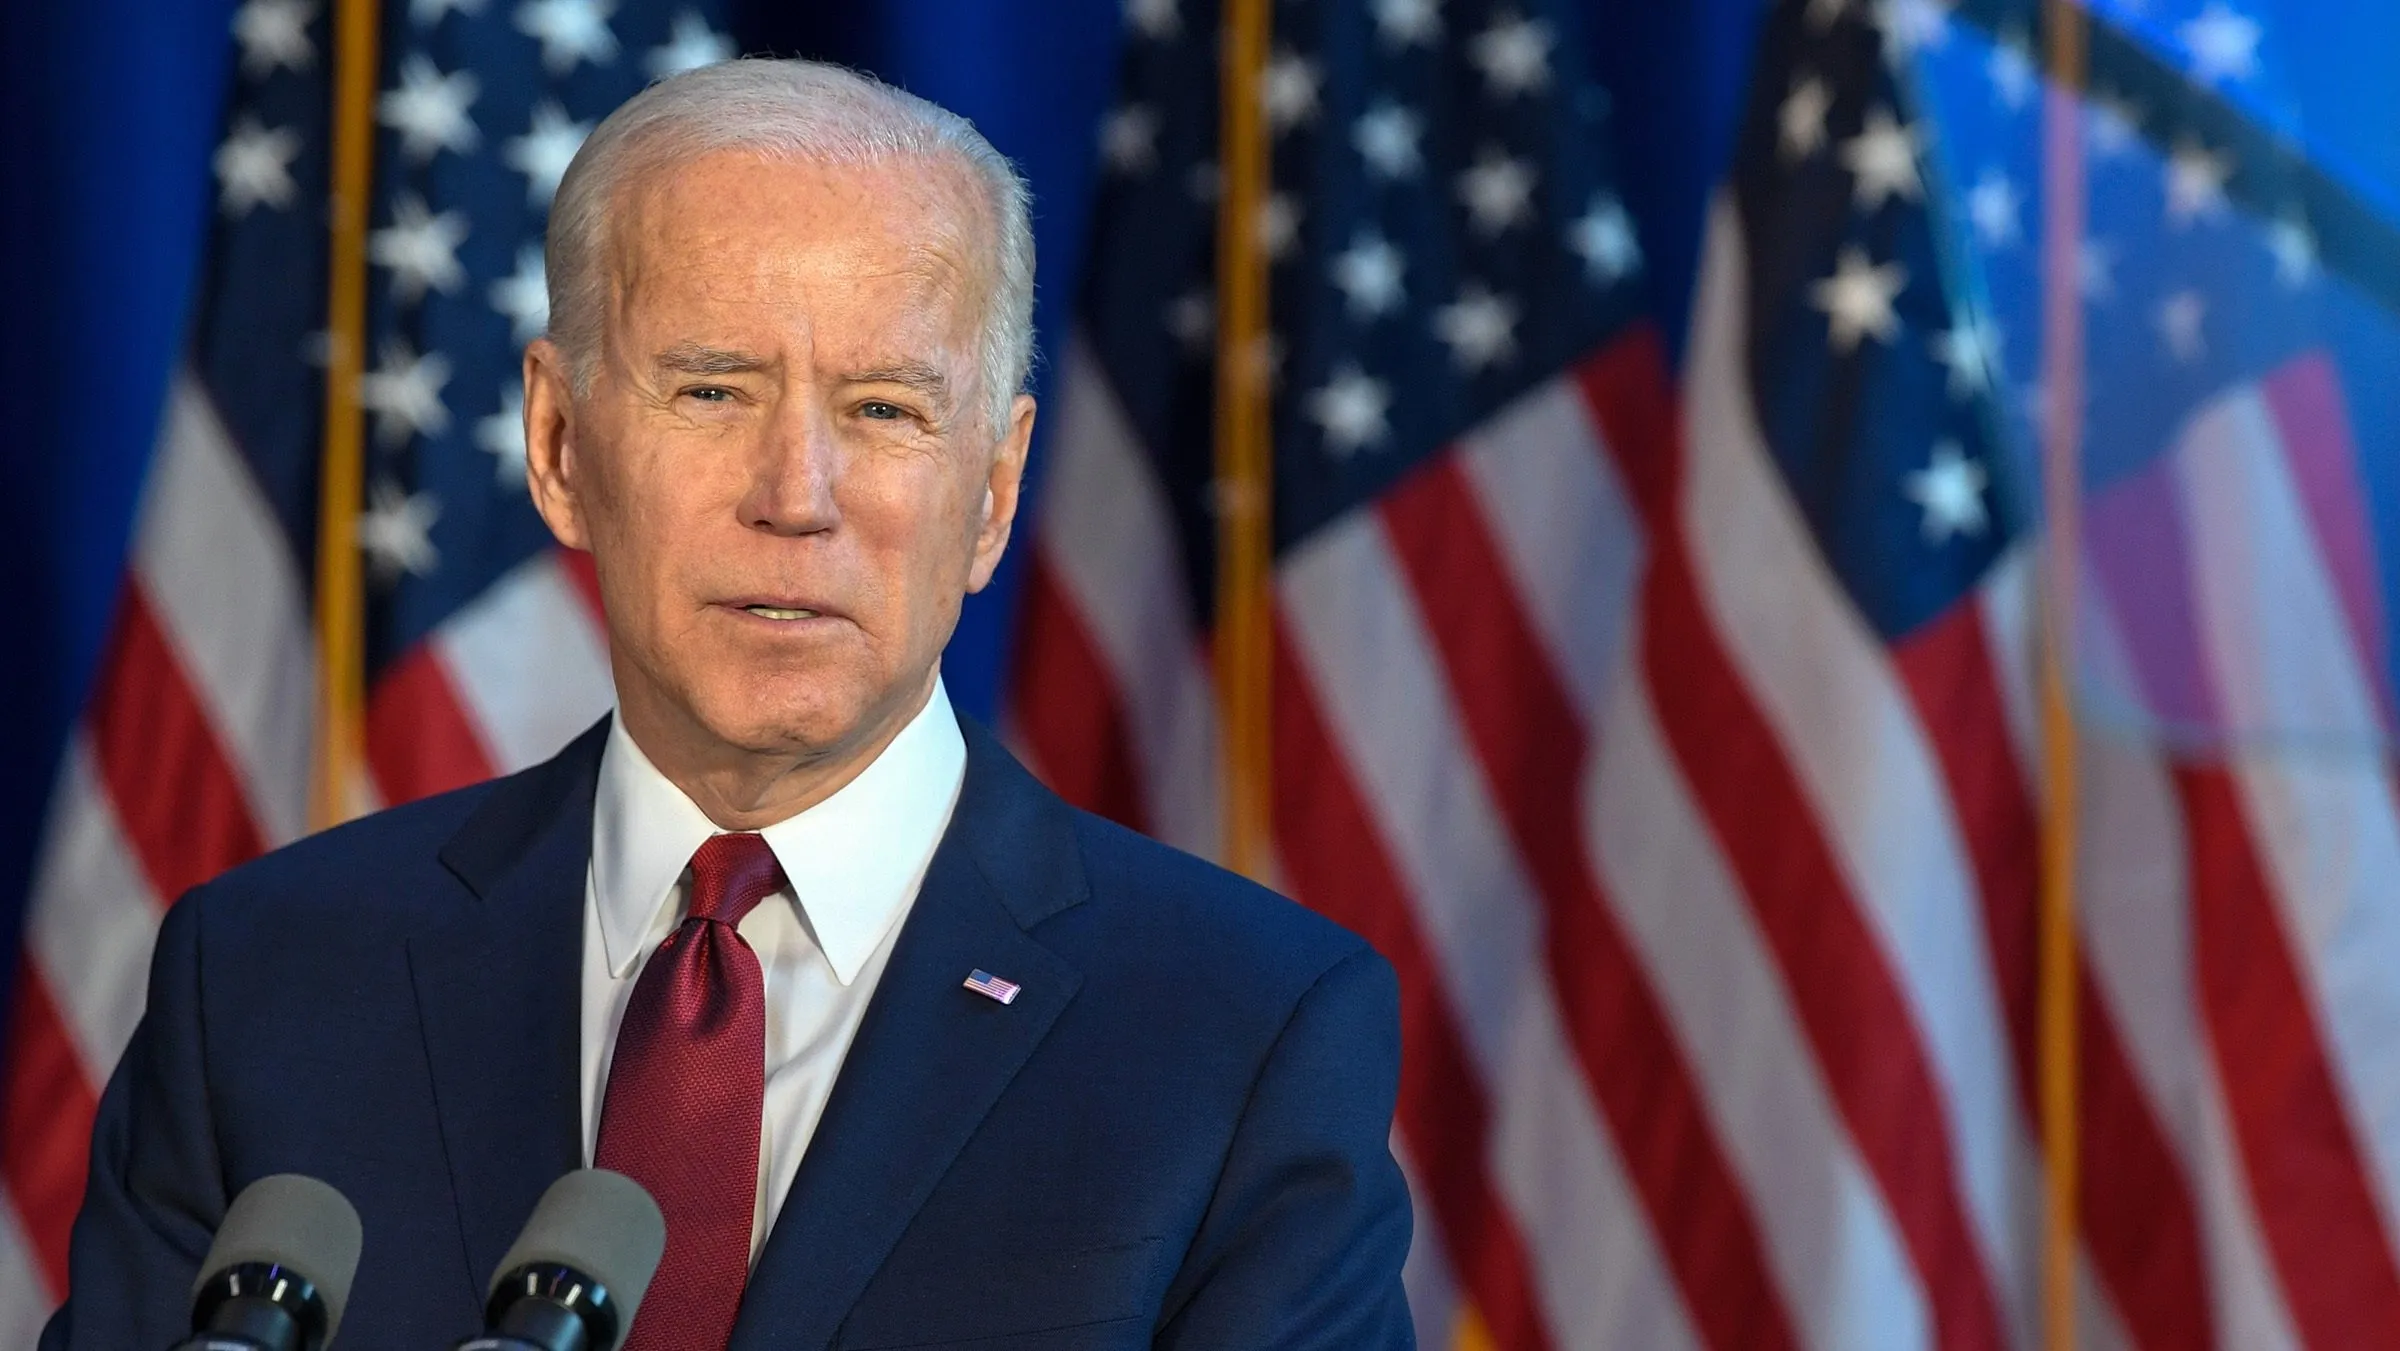 U.S. President Joe Biden. Image: Ron Adar / Shutterstock.com